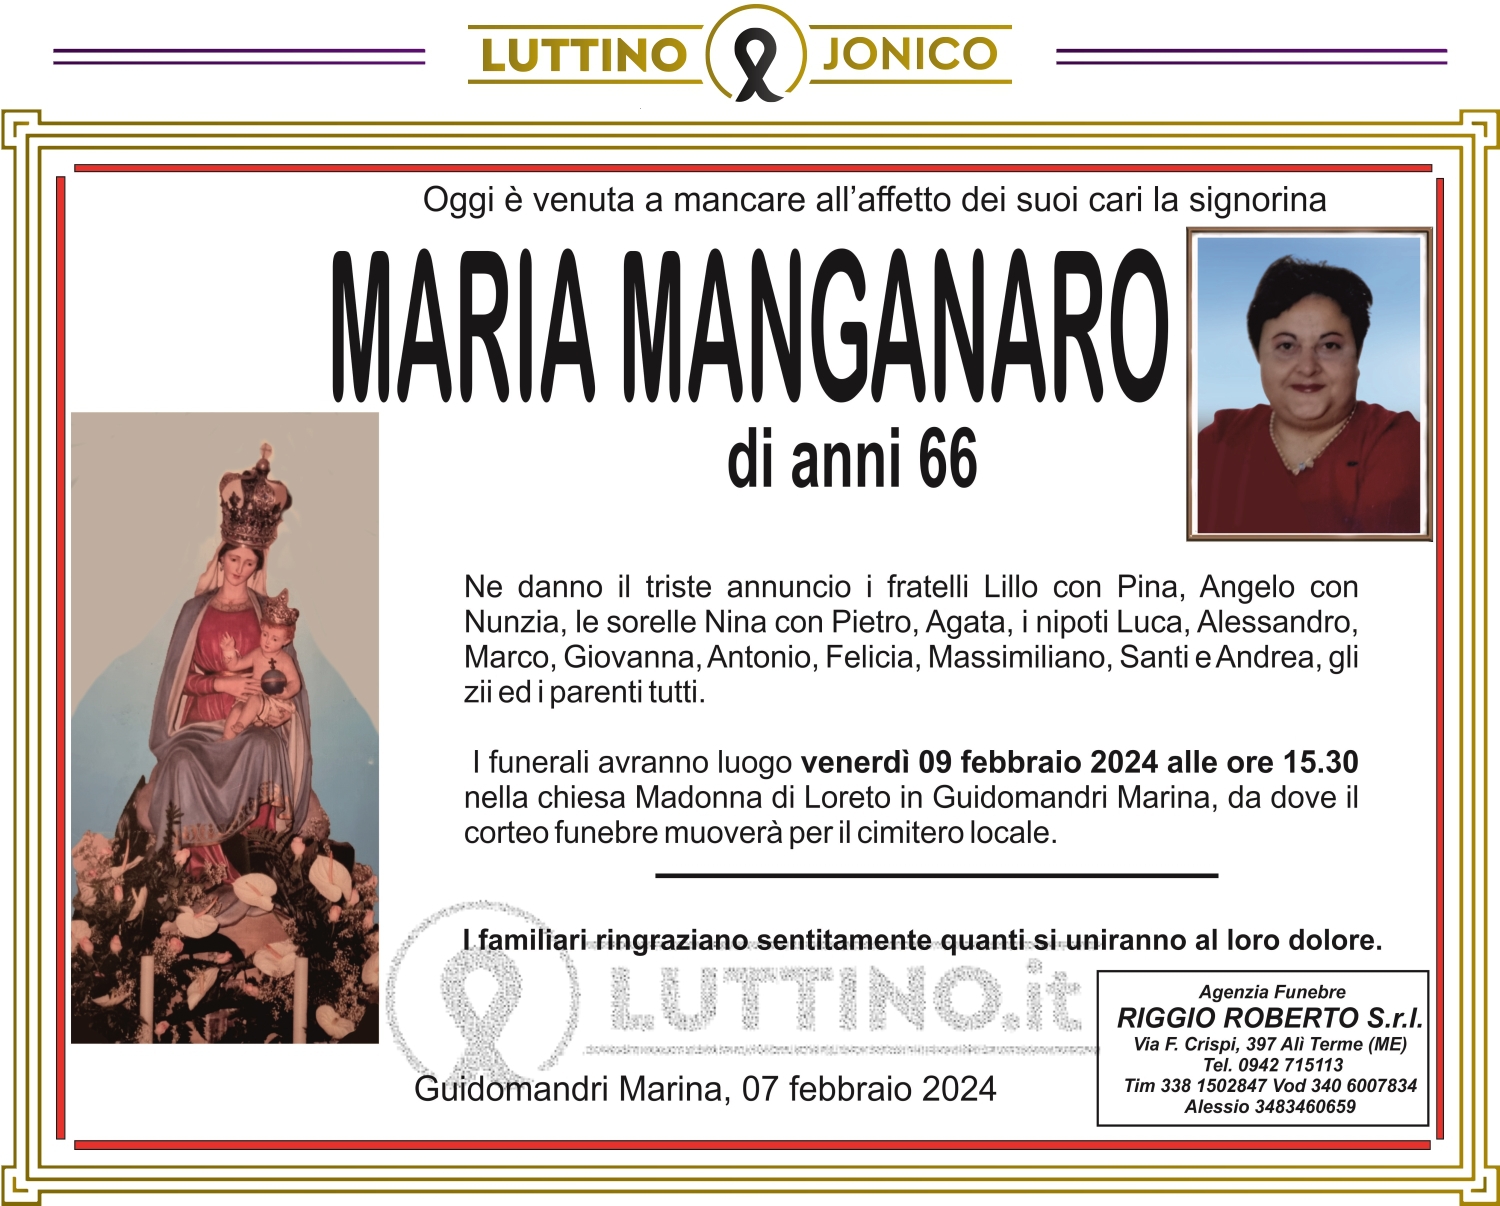 Maria Manganaro